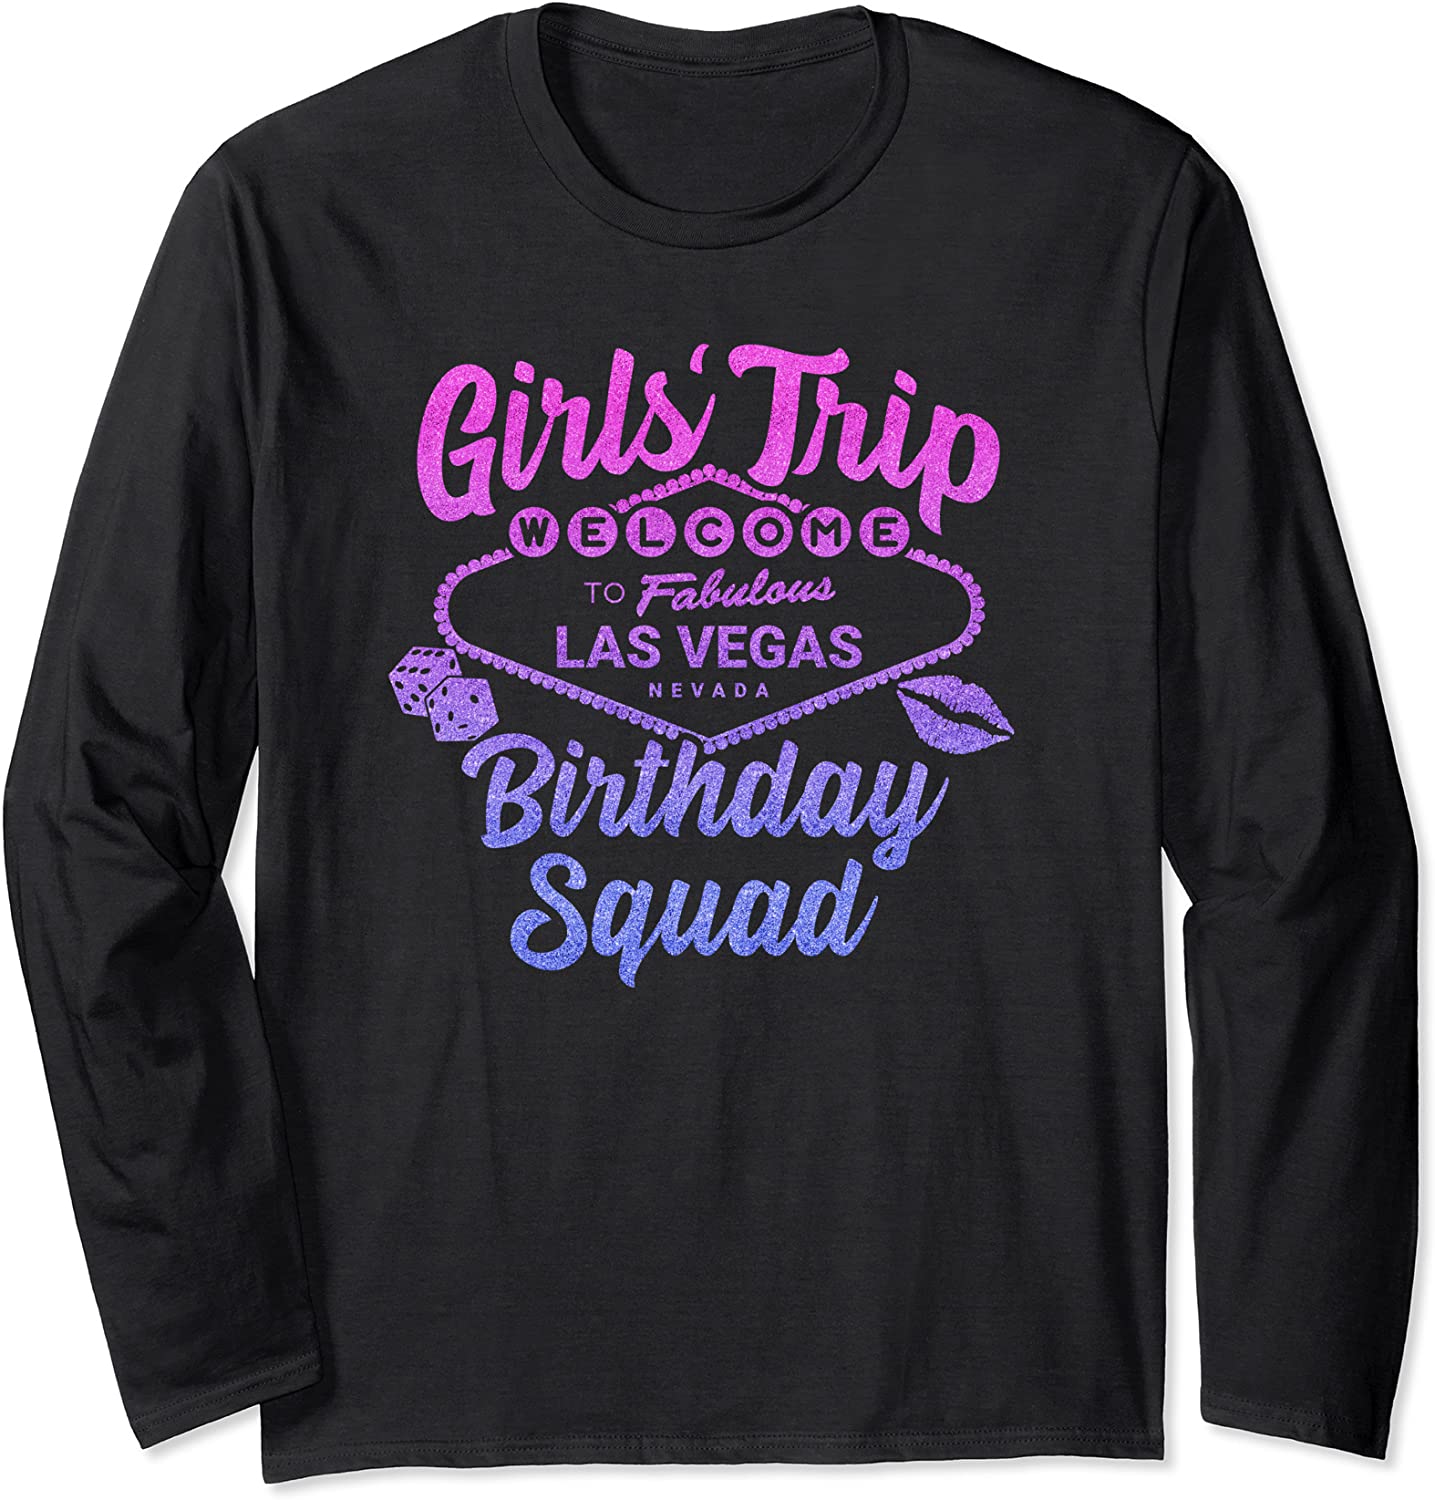 Las Vegas Birthday Party – Girls Trip – Vegas Birthday Squad Hoodie Long Sleeve T-Shirt